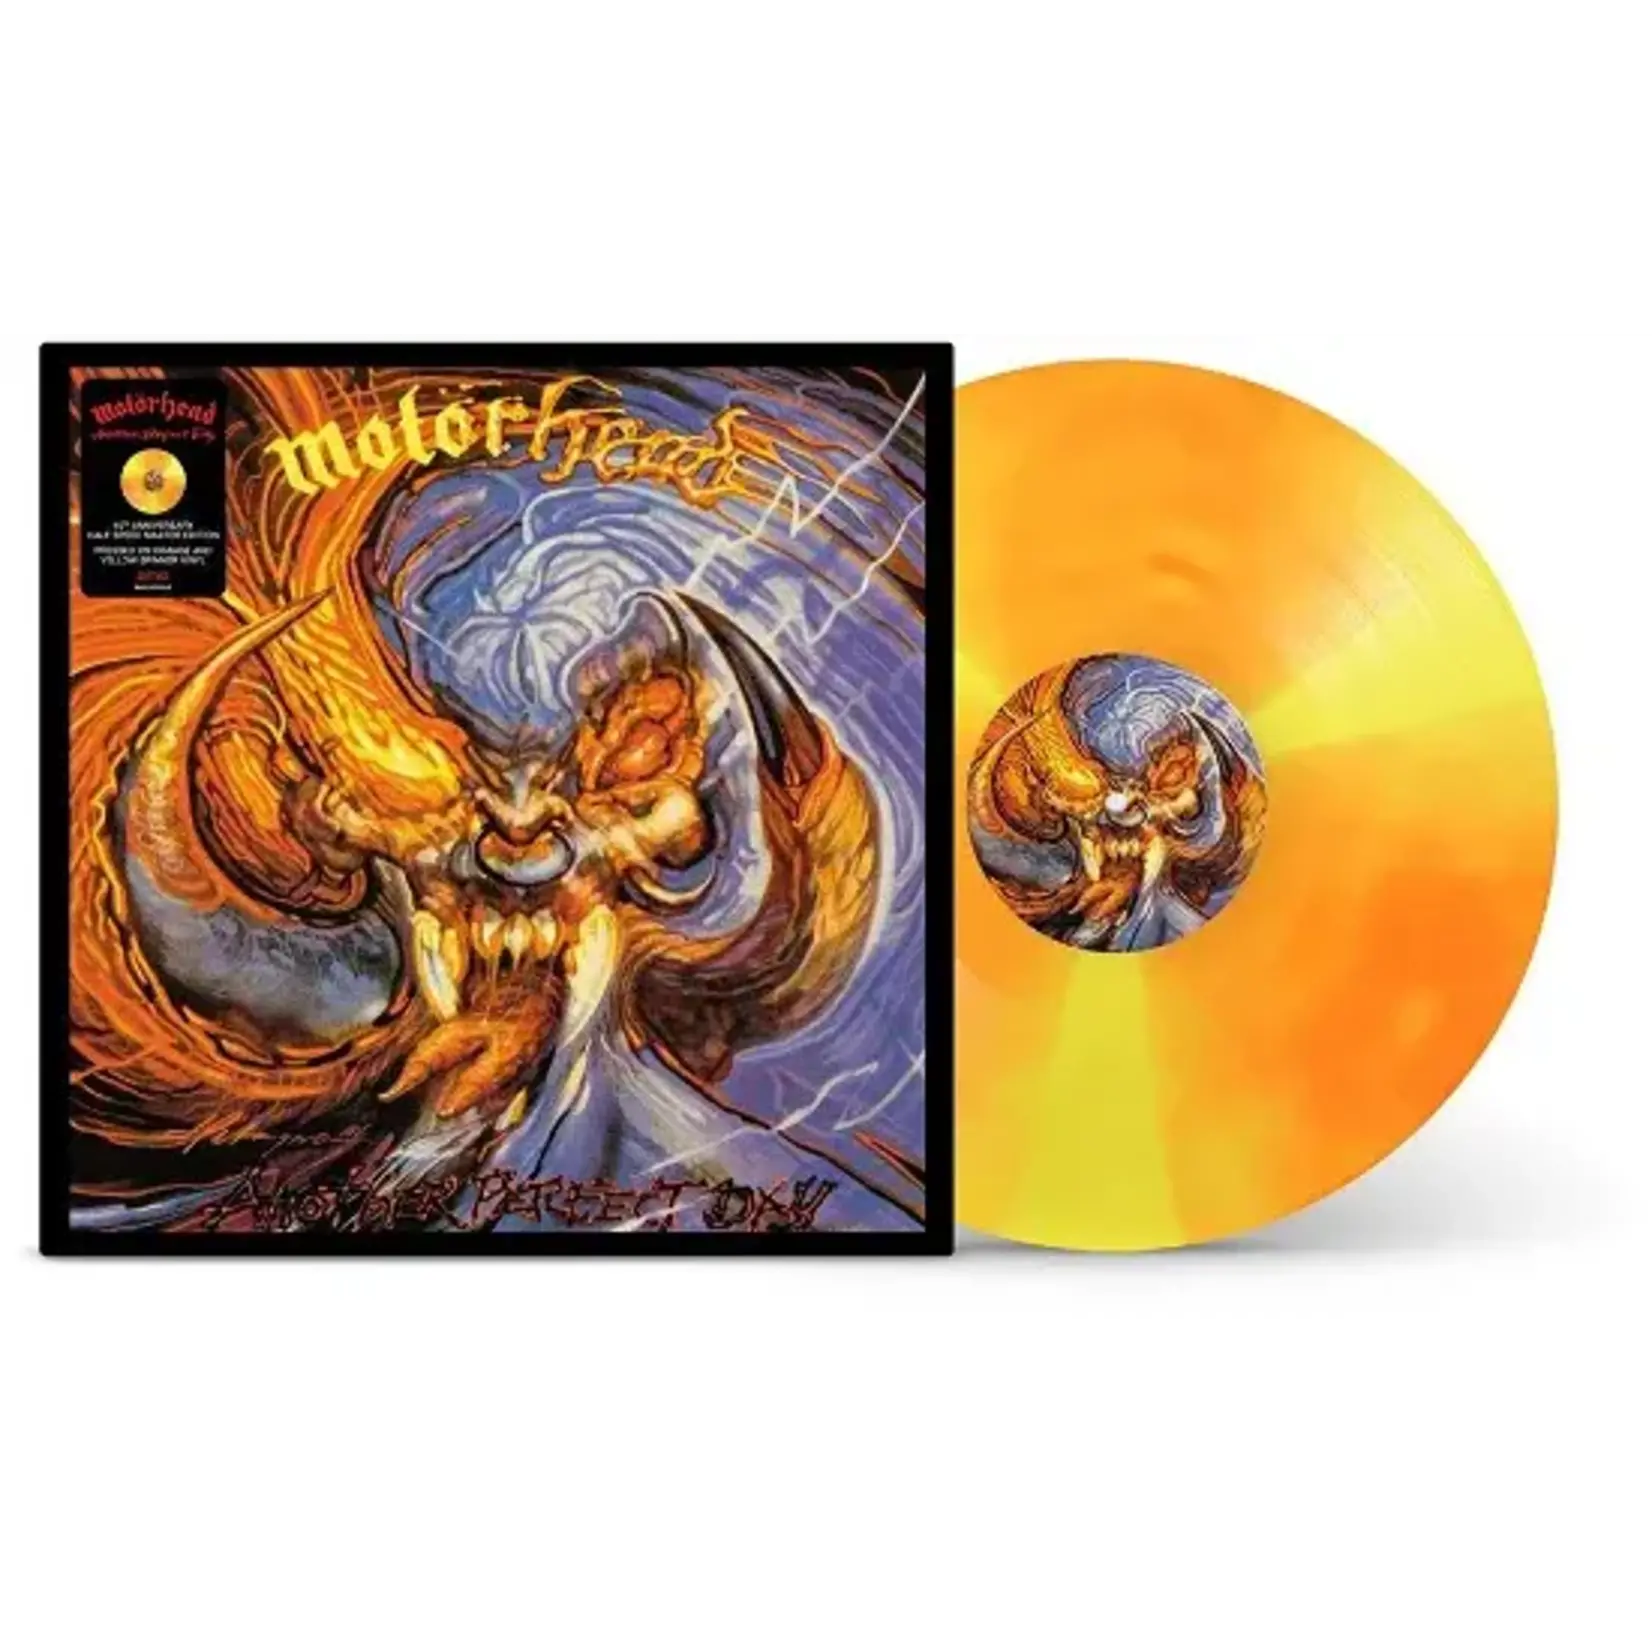 [New] Motorhead - nother Perfect Day (40th Anniversary, orange & yellow vinyl, half-speed master)